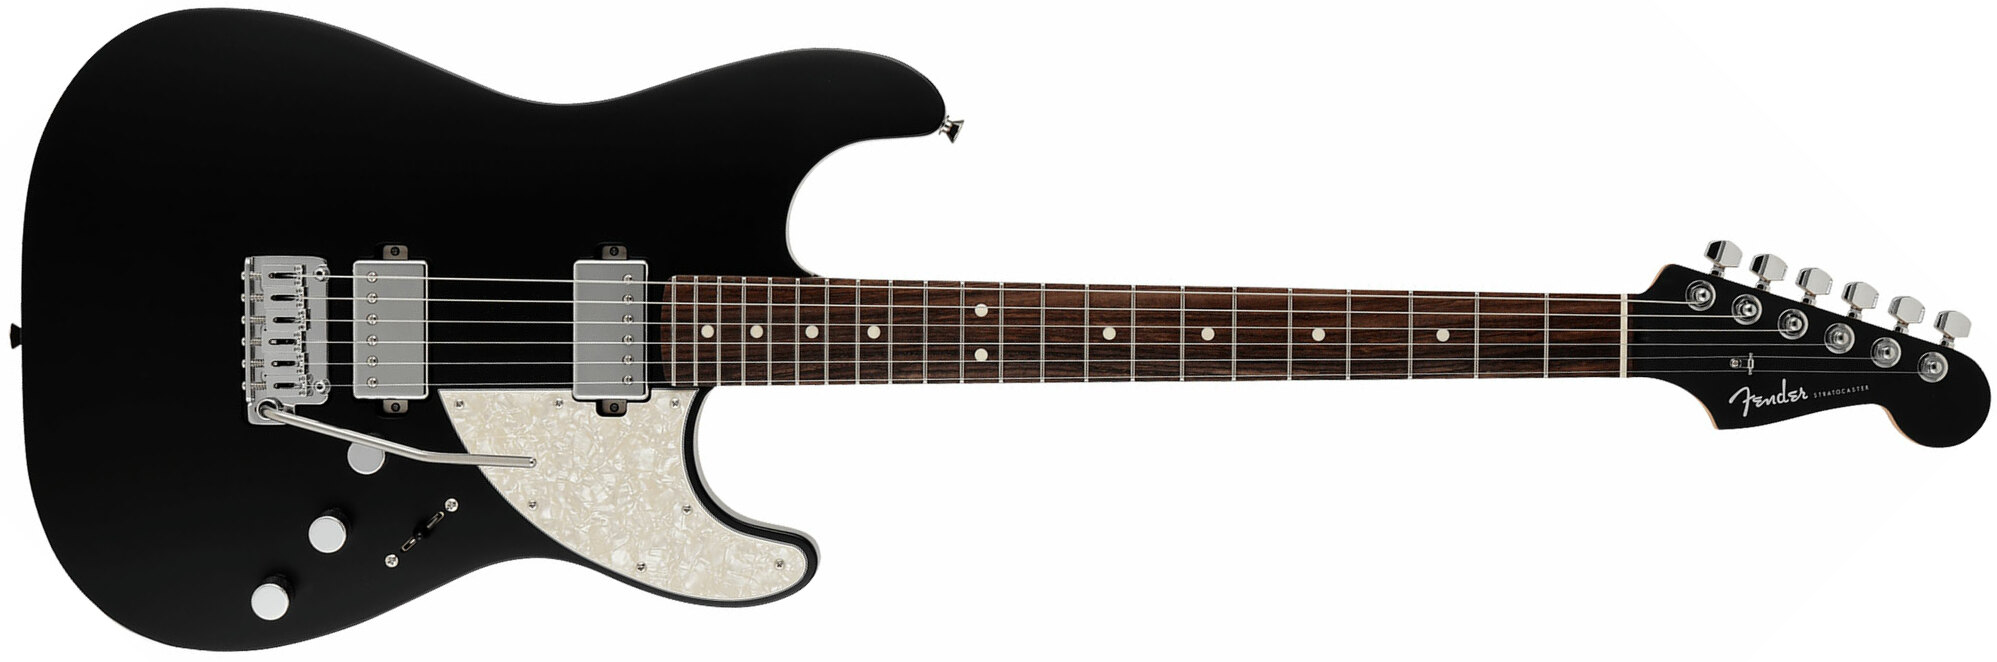 Fender Strat Elemental Mij Jap 2h Trem Rw - Stone Black - E-Gitarre in Str-Form - Main picture